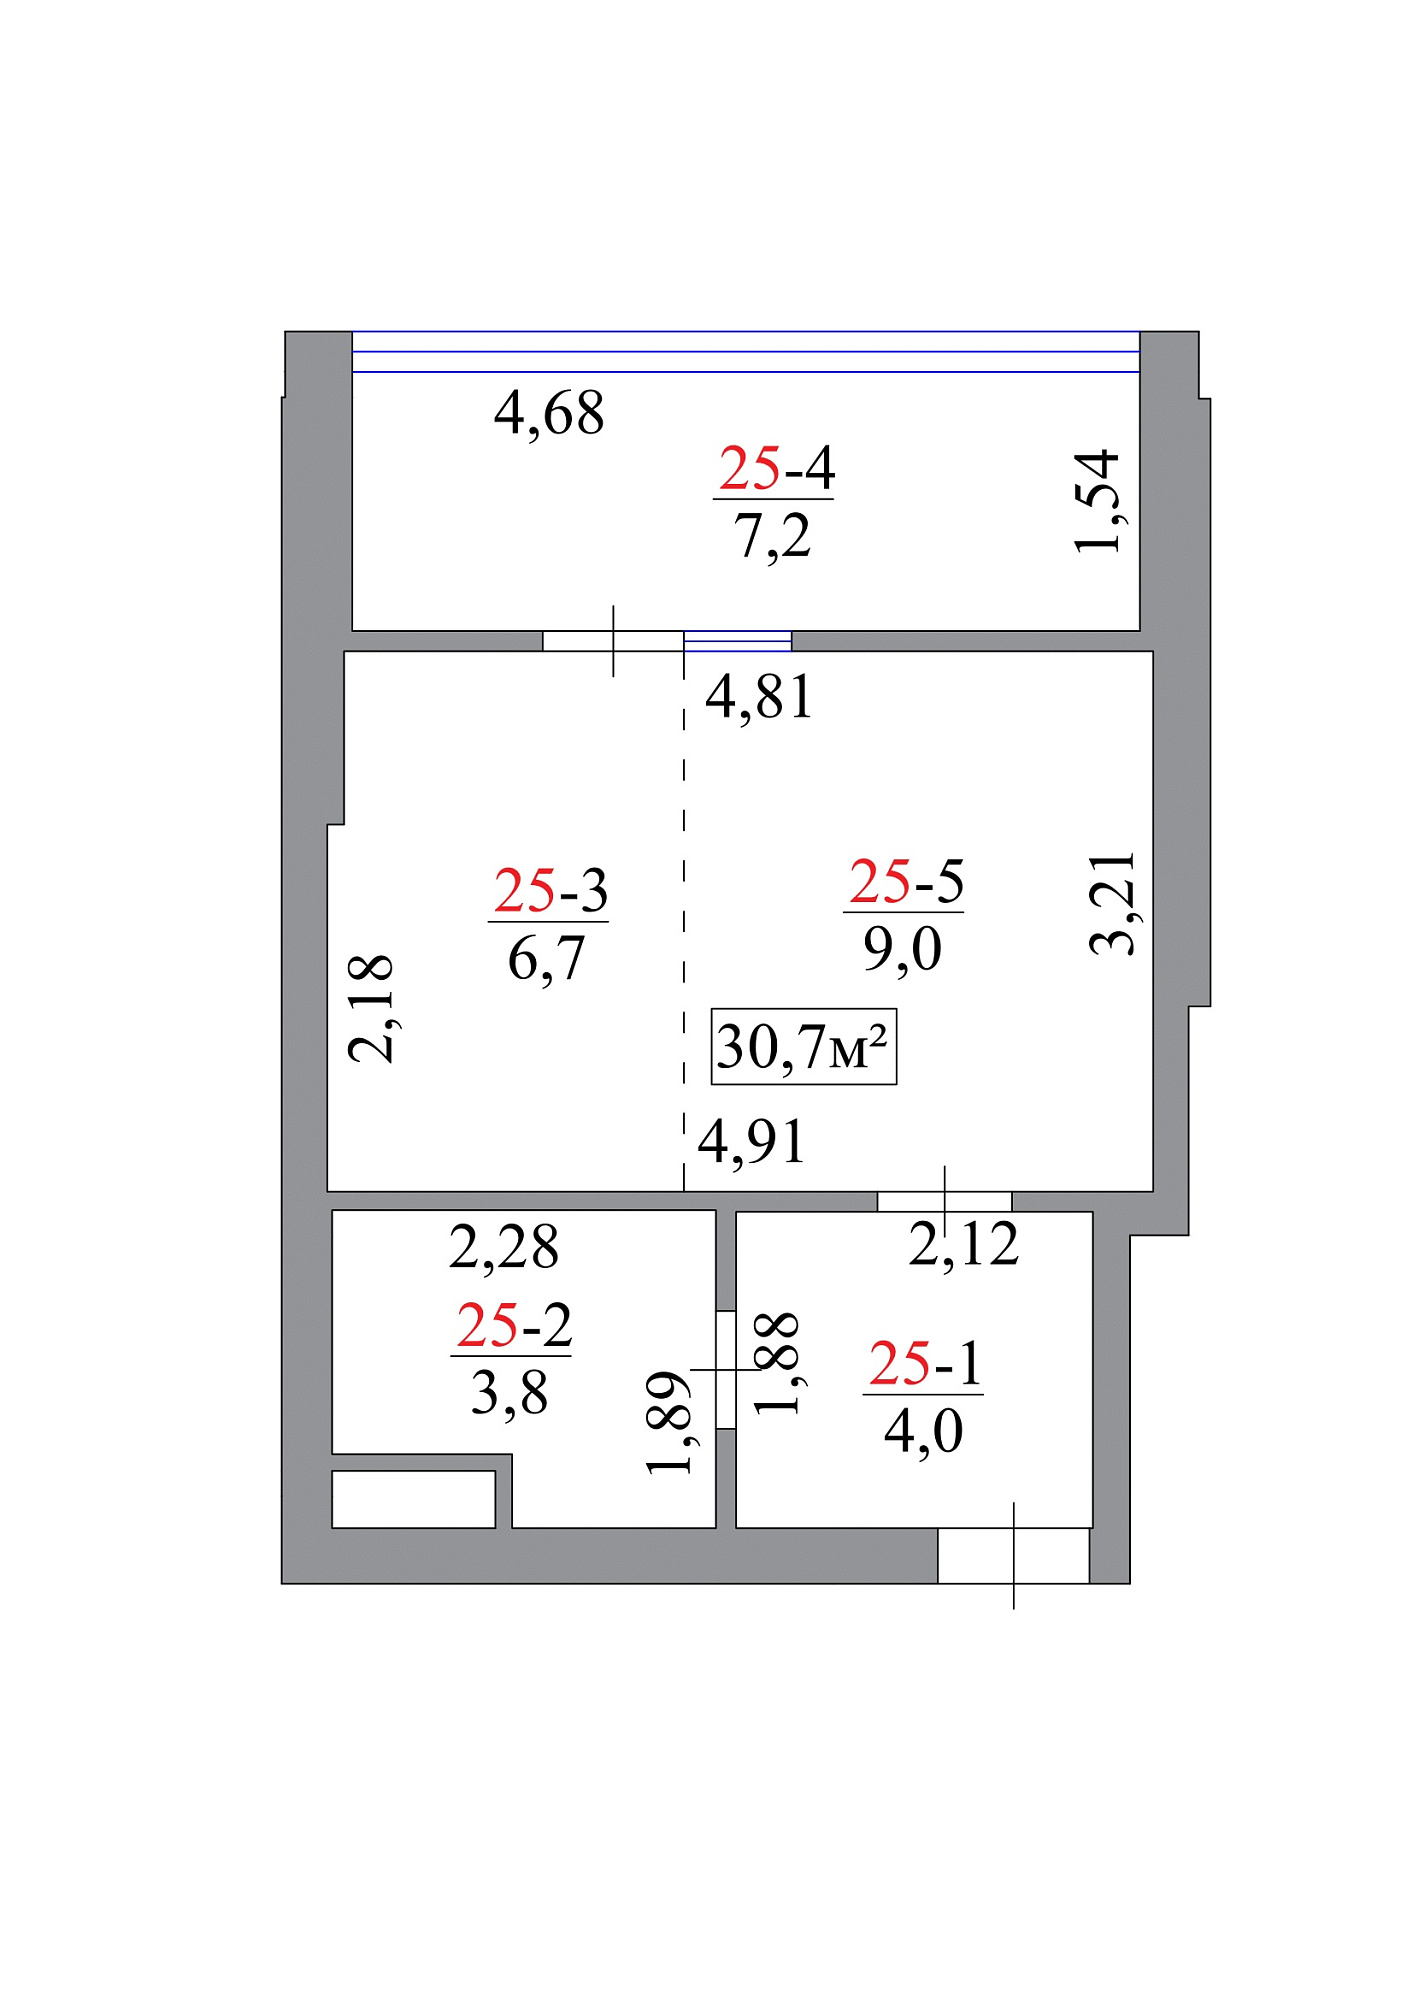 Planning Smart flats area 30.7m2, AB-07-03/00023.